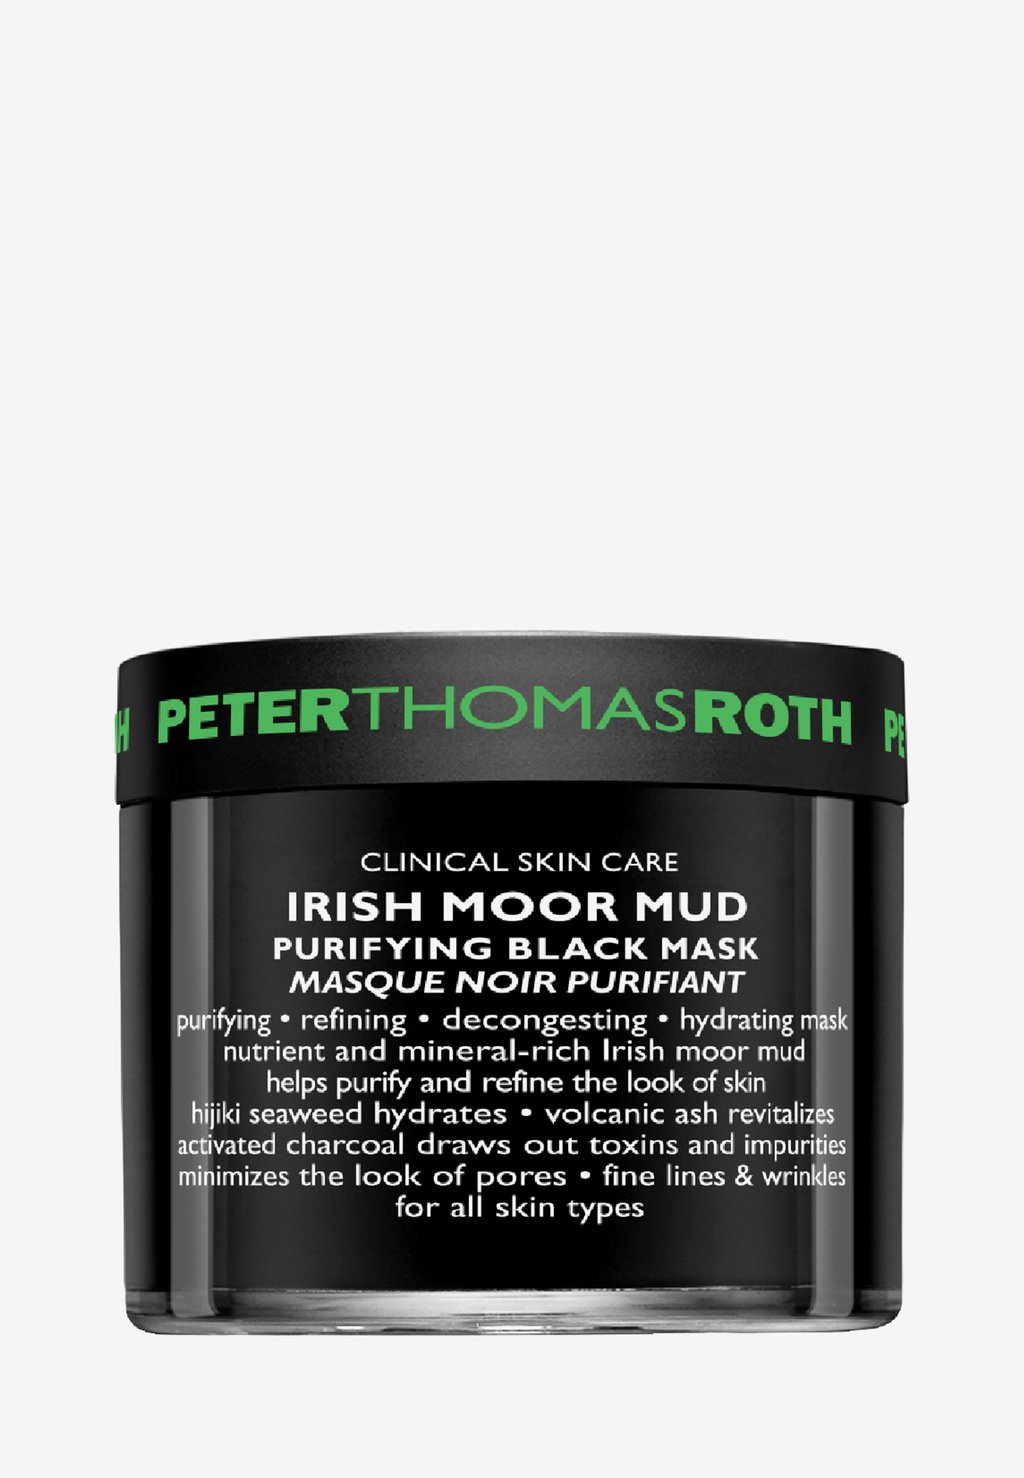 Маска для лица Irish Moor Mud Peter Thomas Roth peter thomas roth irish moor mud purifying black mask